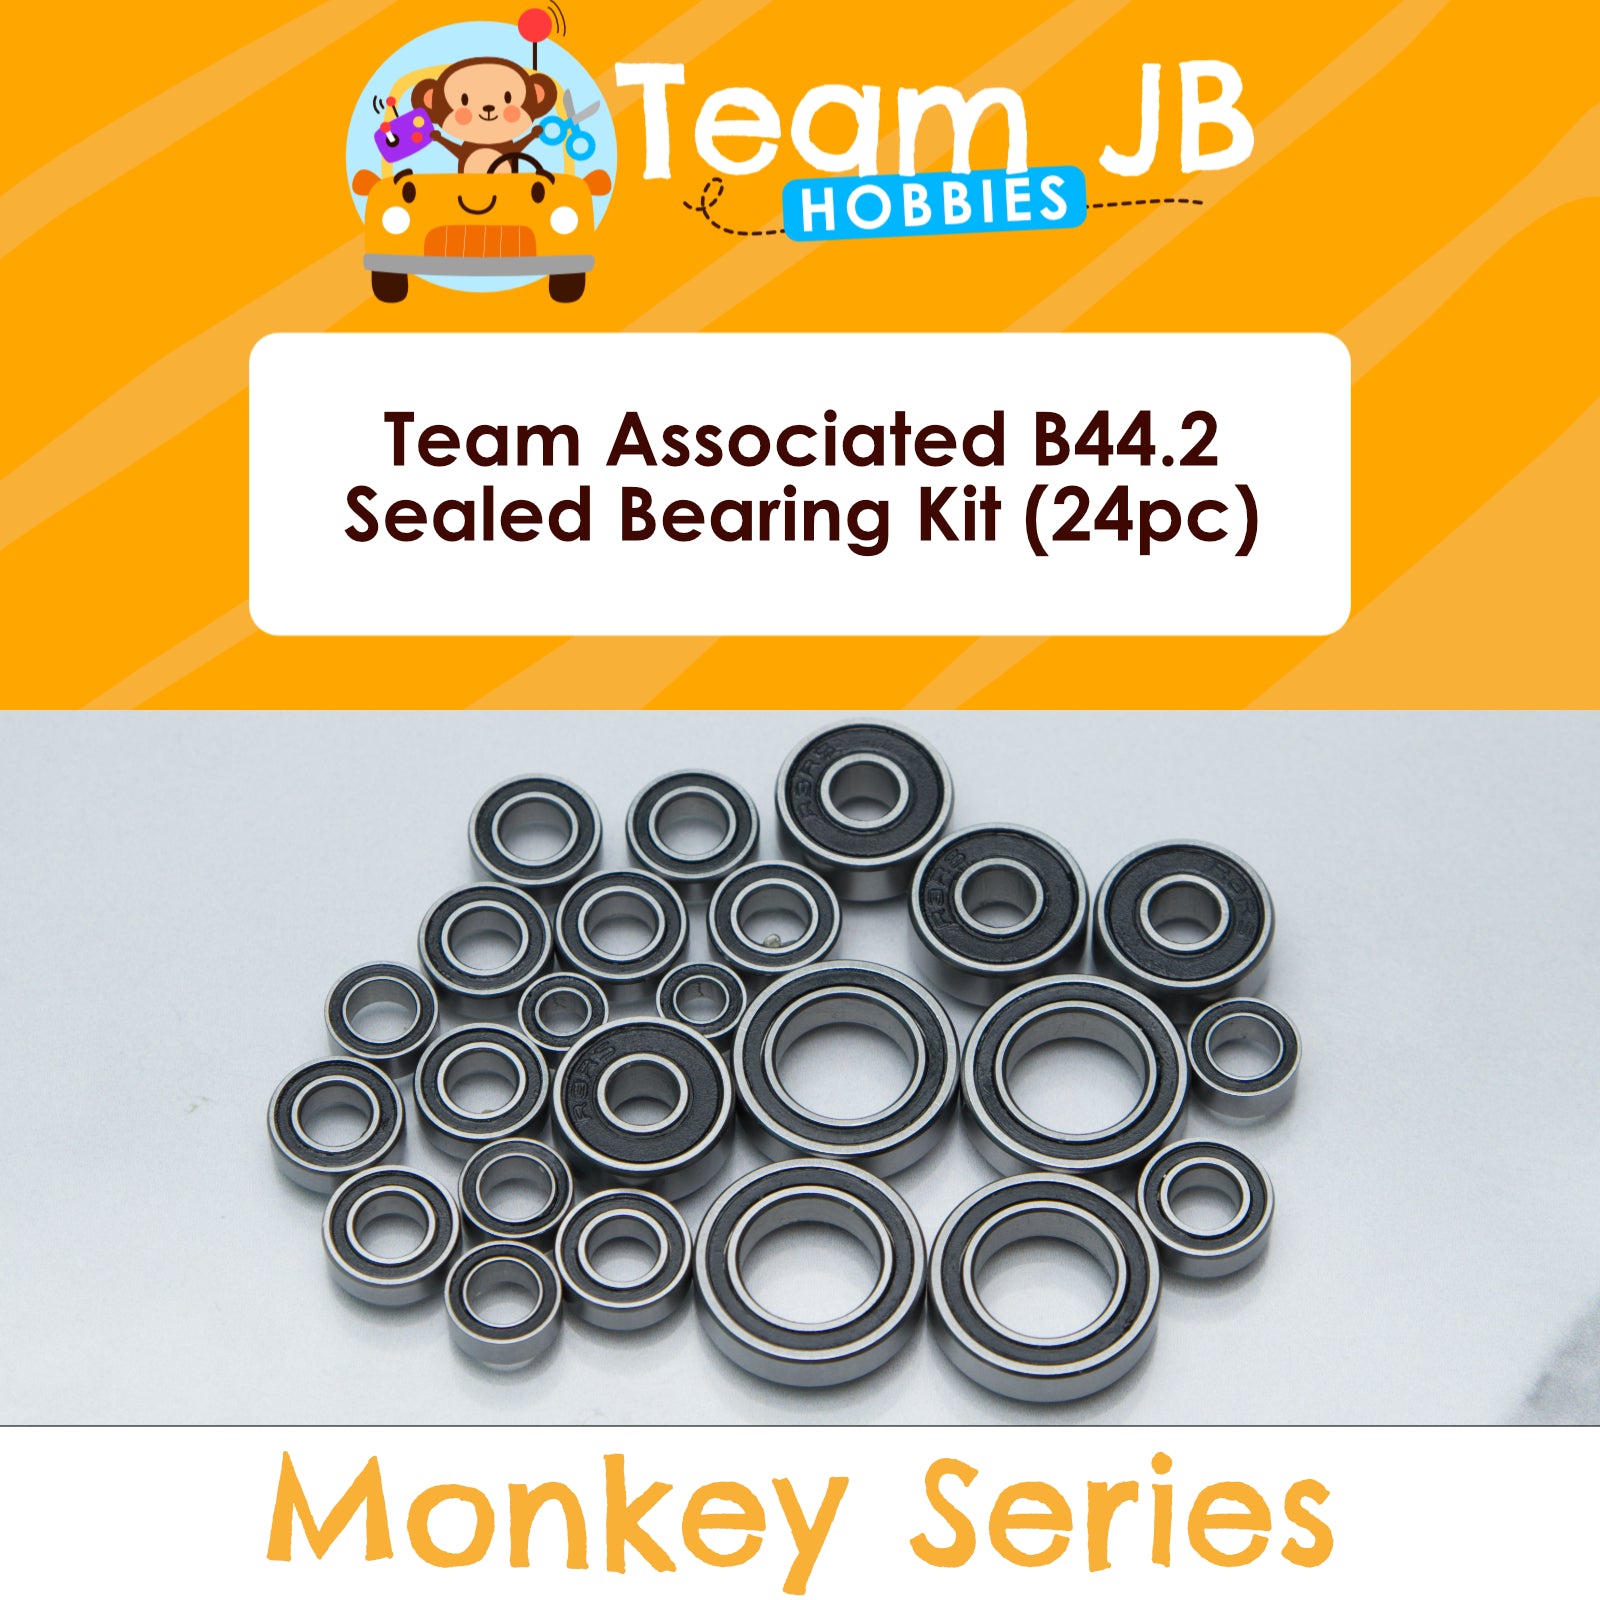 Team Associated B44.2 - Sealed Bearing Kit